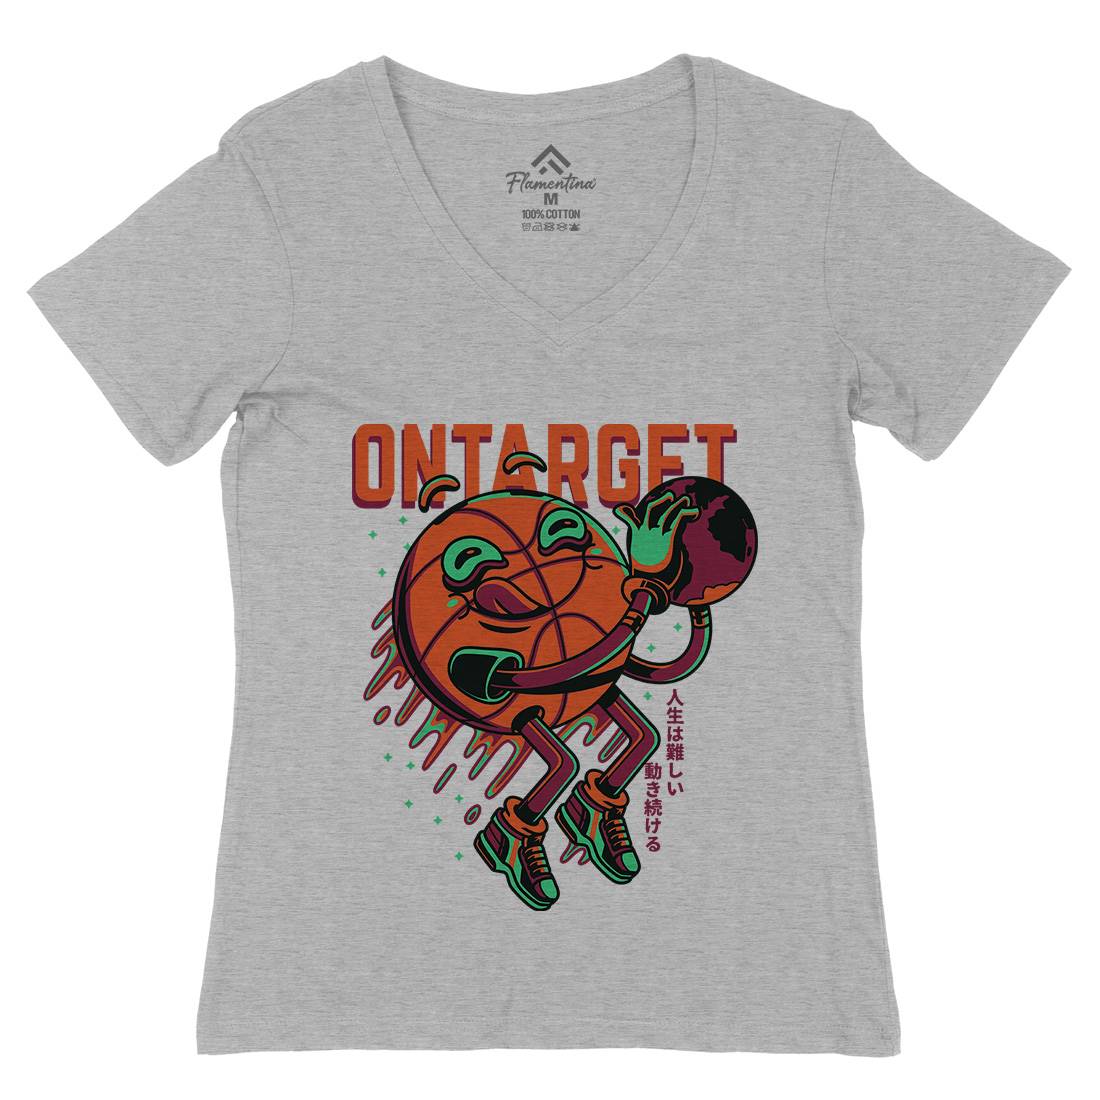 On Target Womens Organic V-Neck T-Shirt Sport D673